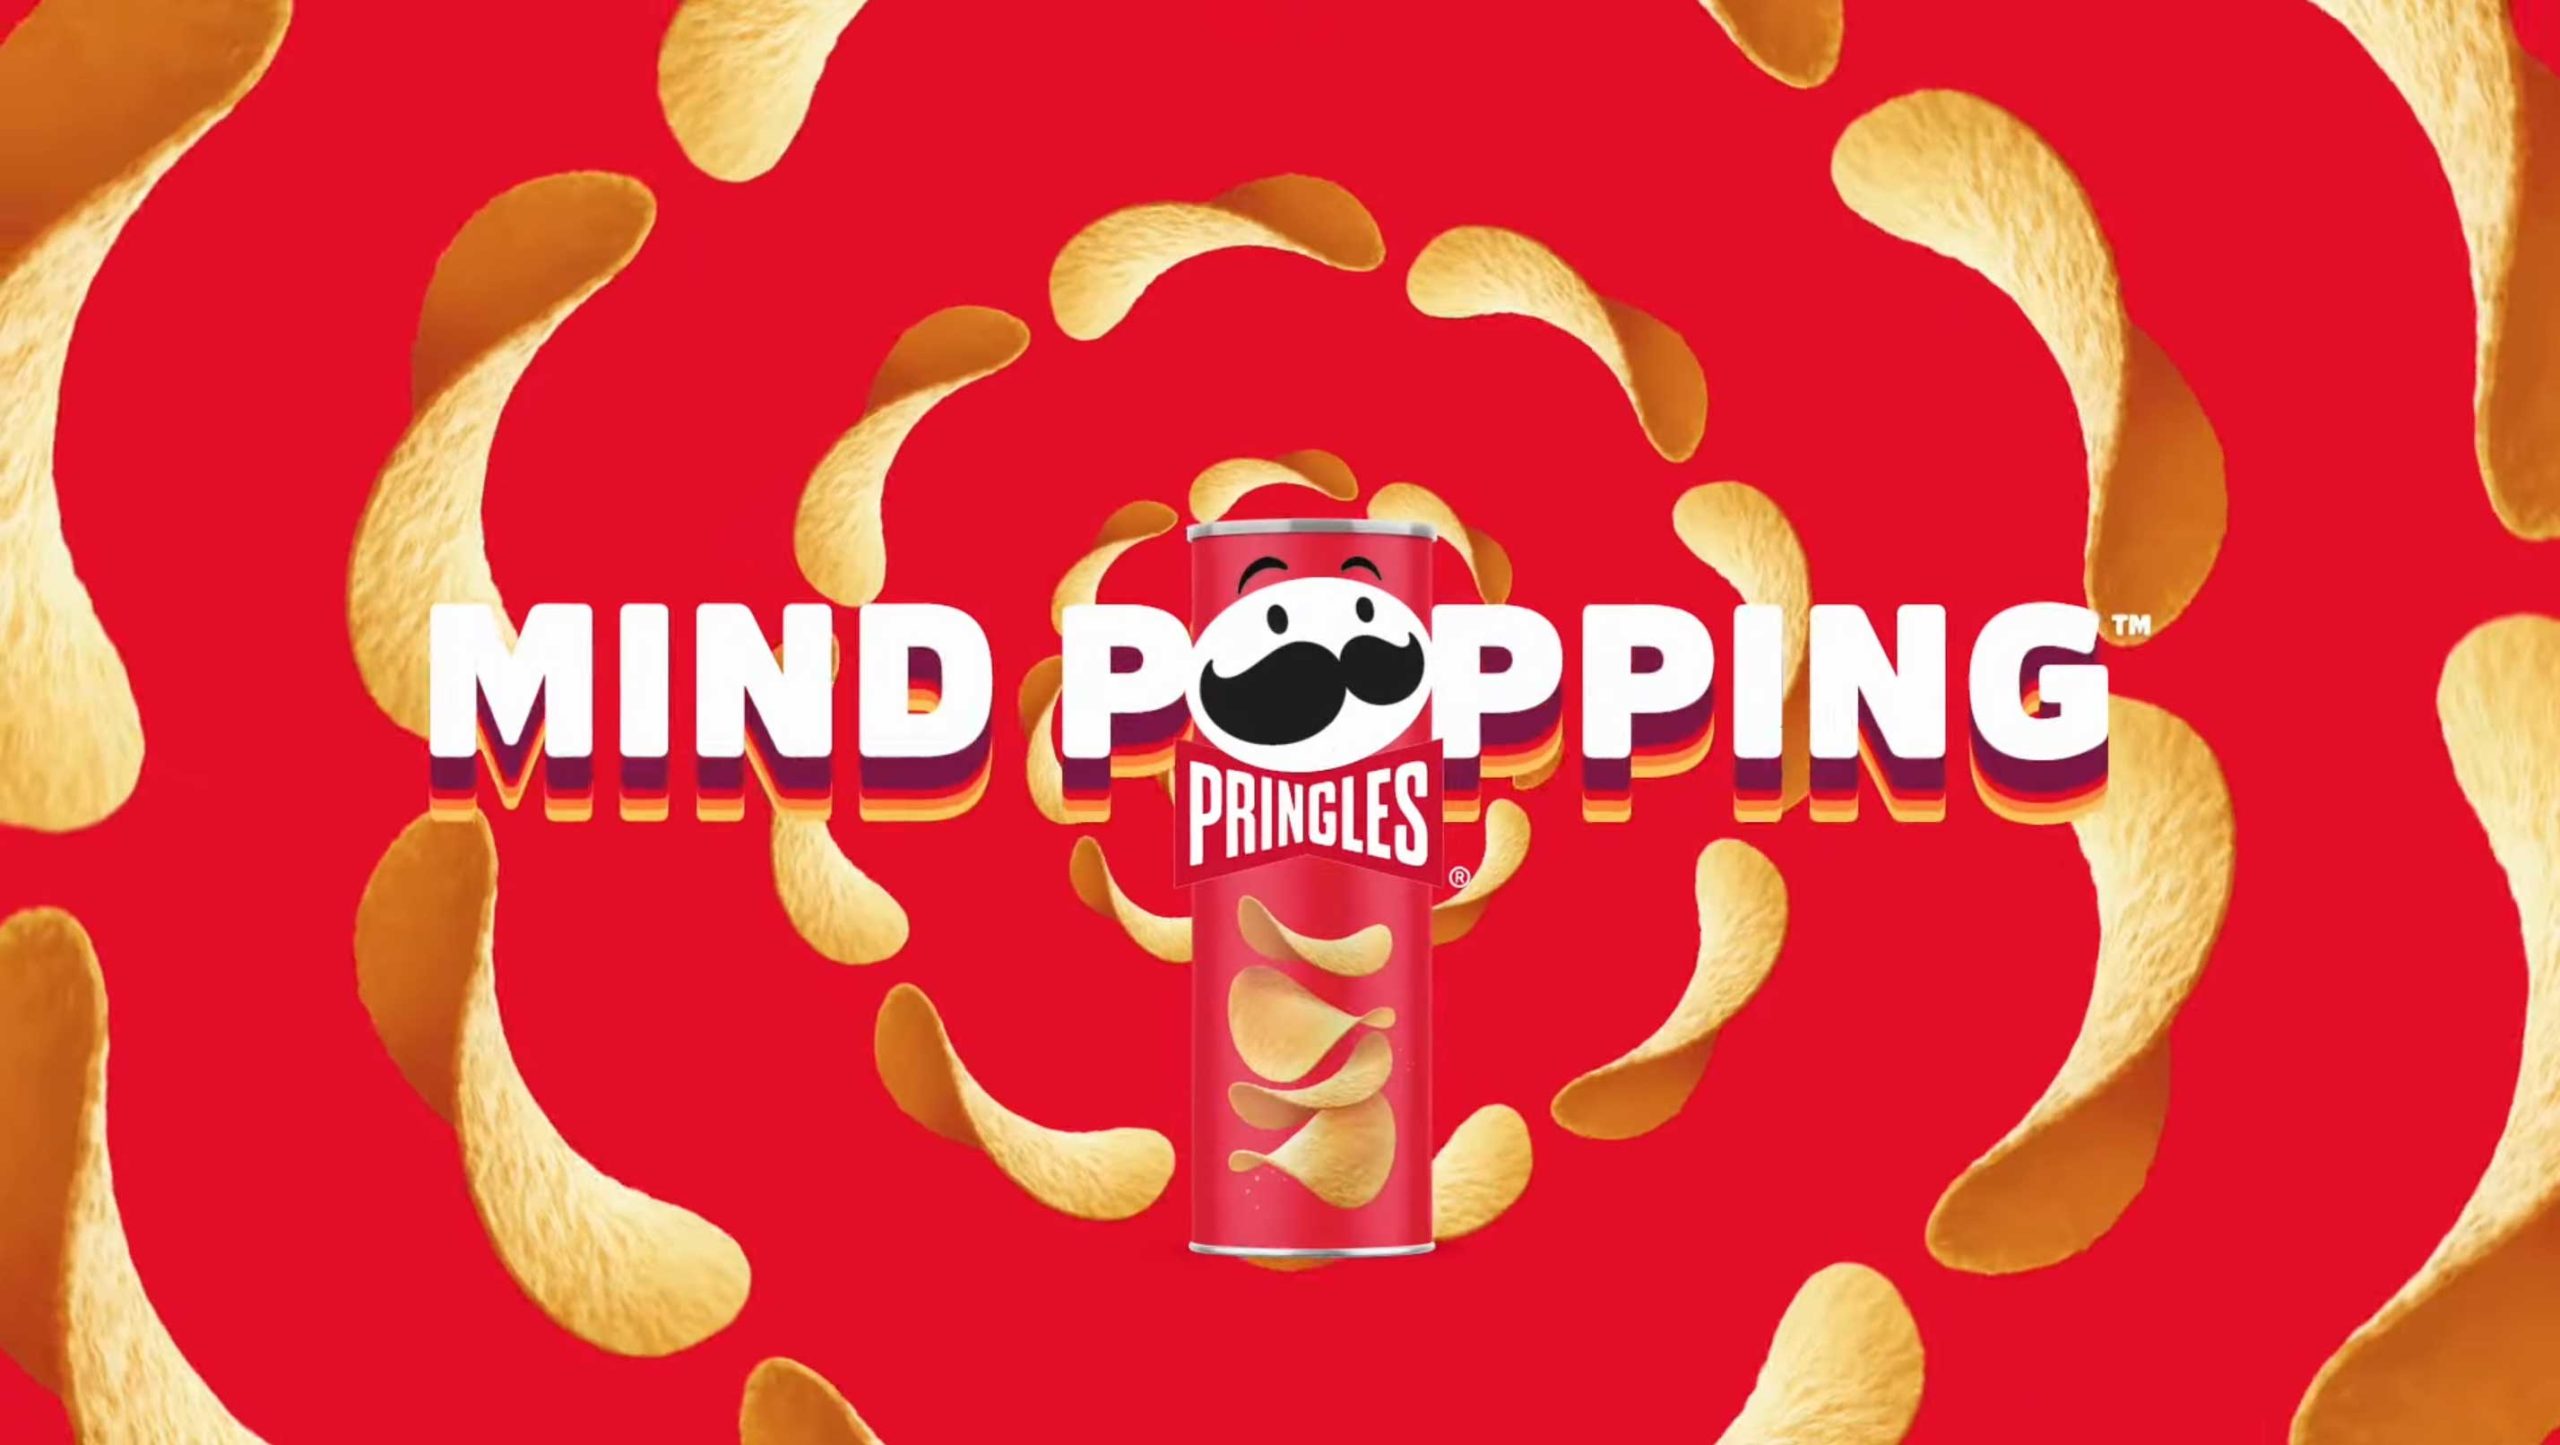 Pringles Mind Popping commercial Noah Harris | STASH MAGAZINE